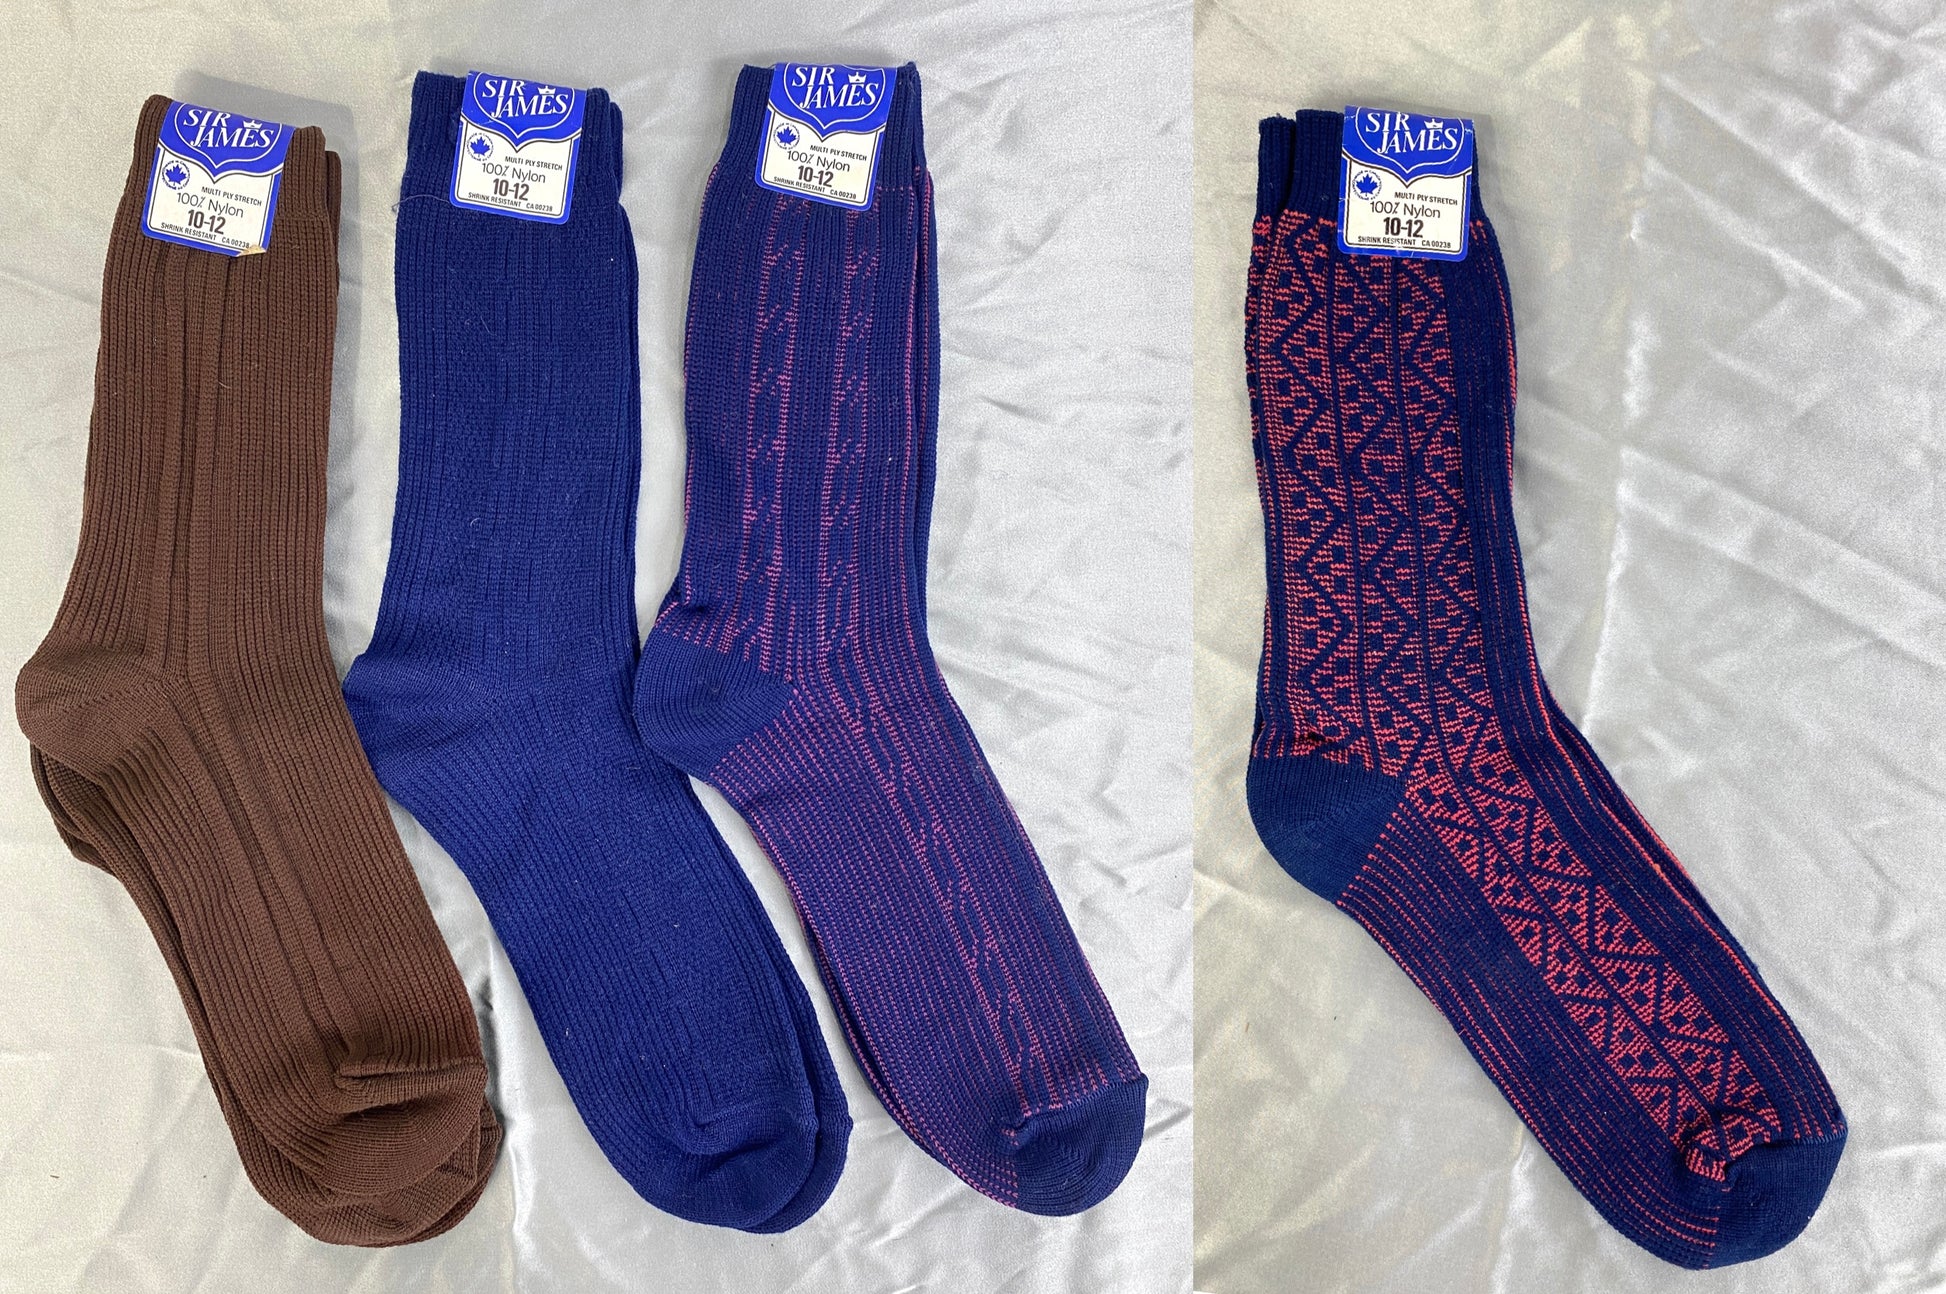 Vintage Deadstock Sir James Brown & Blue Nylon Socks, x6, Size 10-12